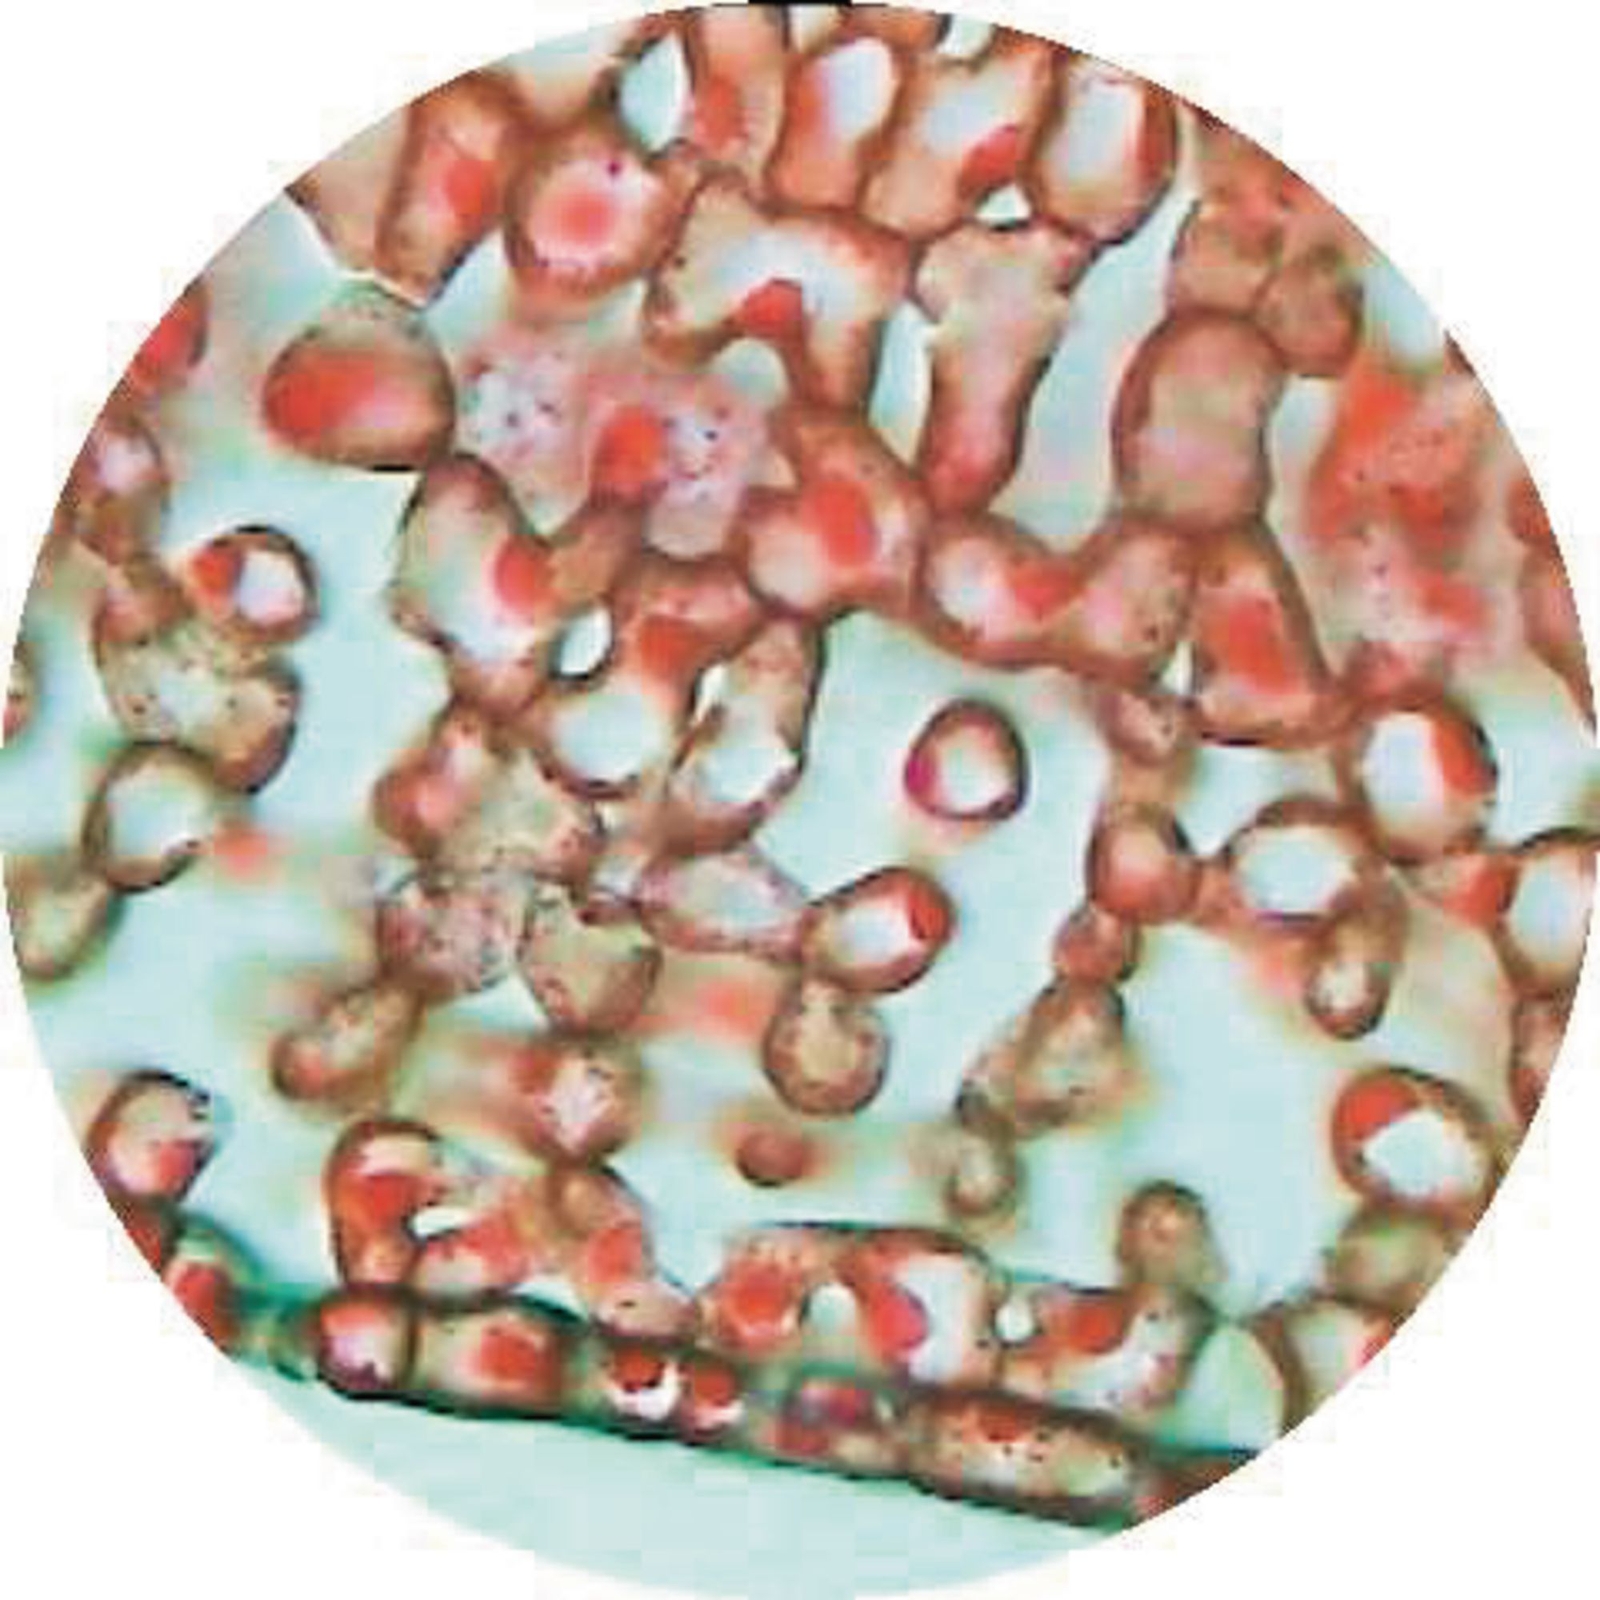 Buxus Lower Epidermis Showing Stomata